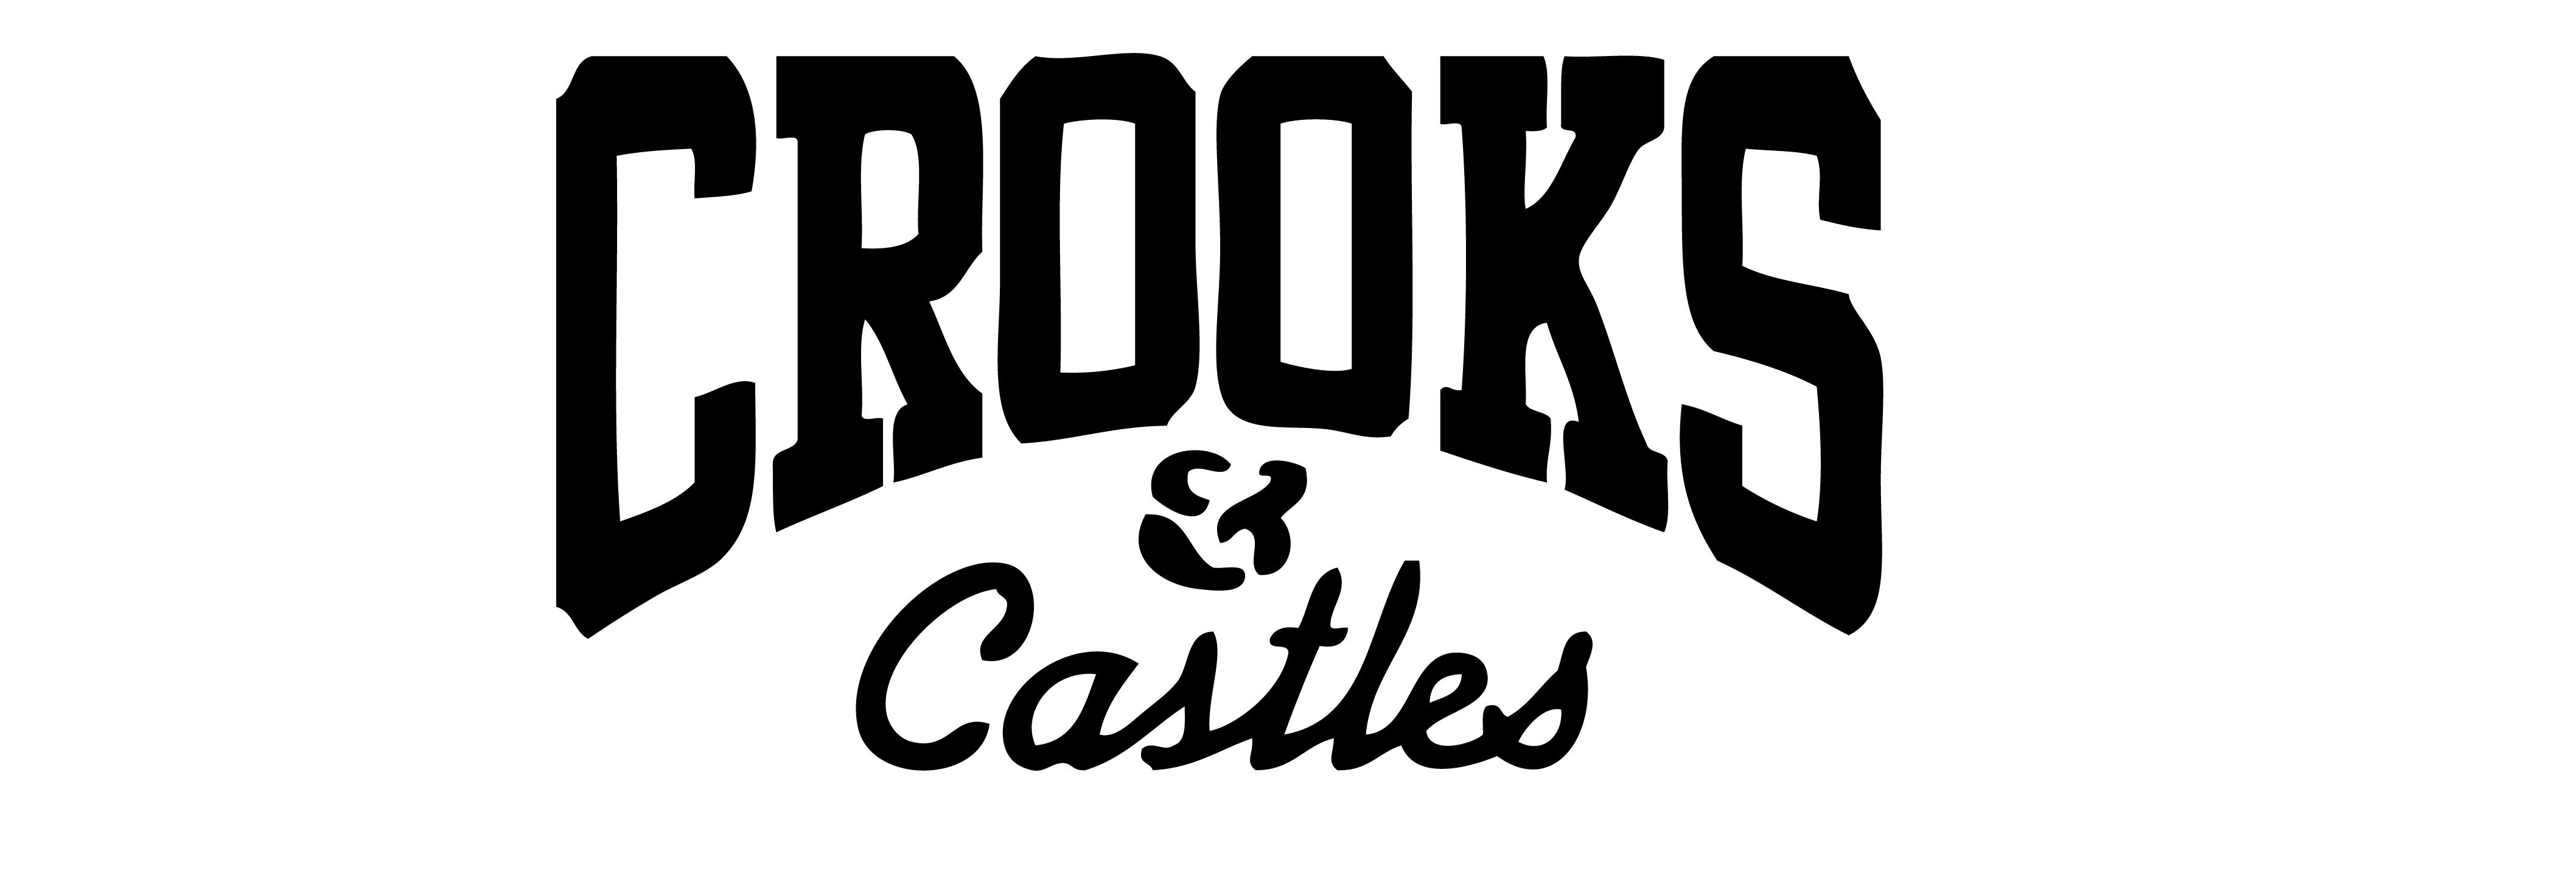 Crooks and Castles All Logo - CROOKS-CASTLES-LOGO-psd50234 (2) - Direct Liquidation | Vancouver ...